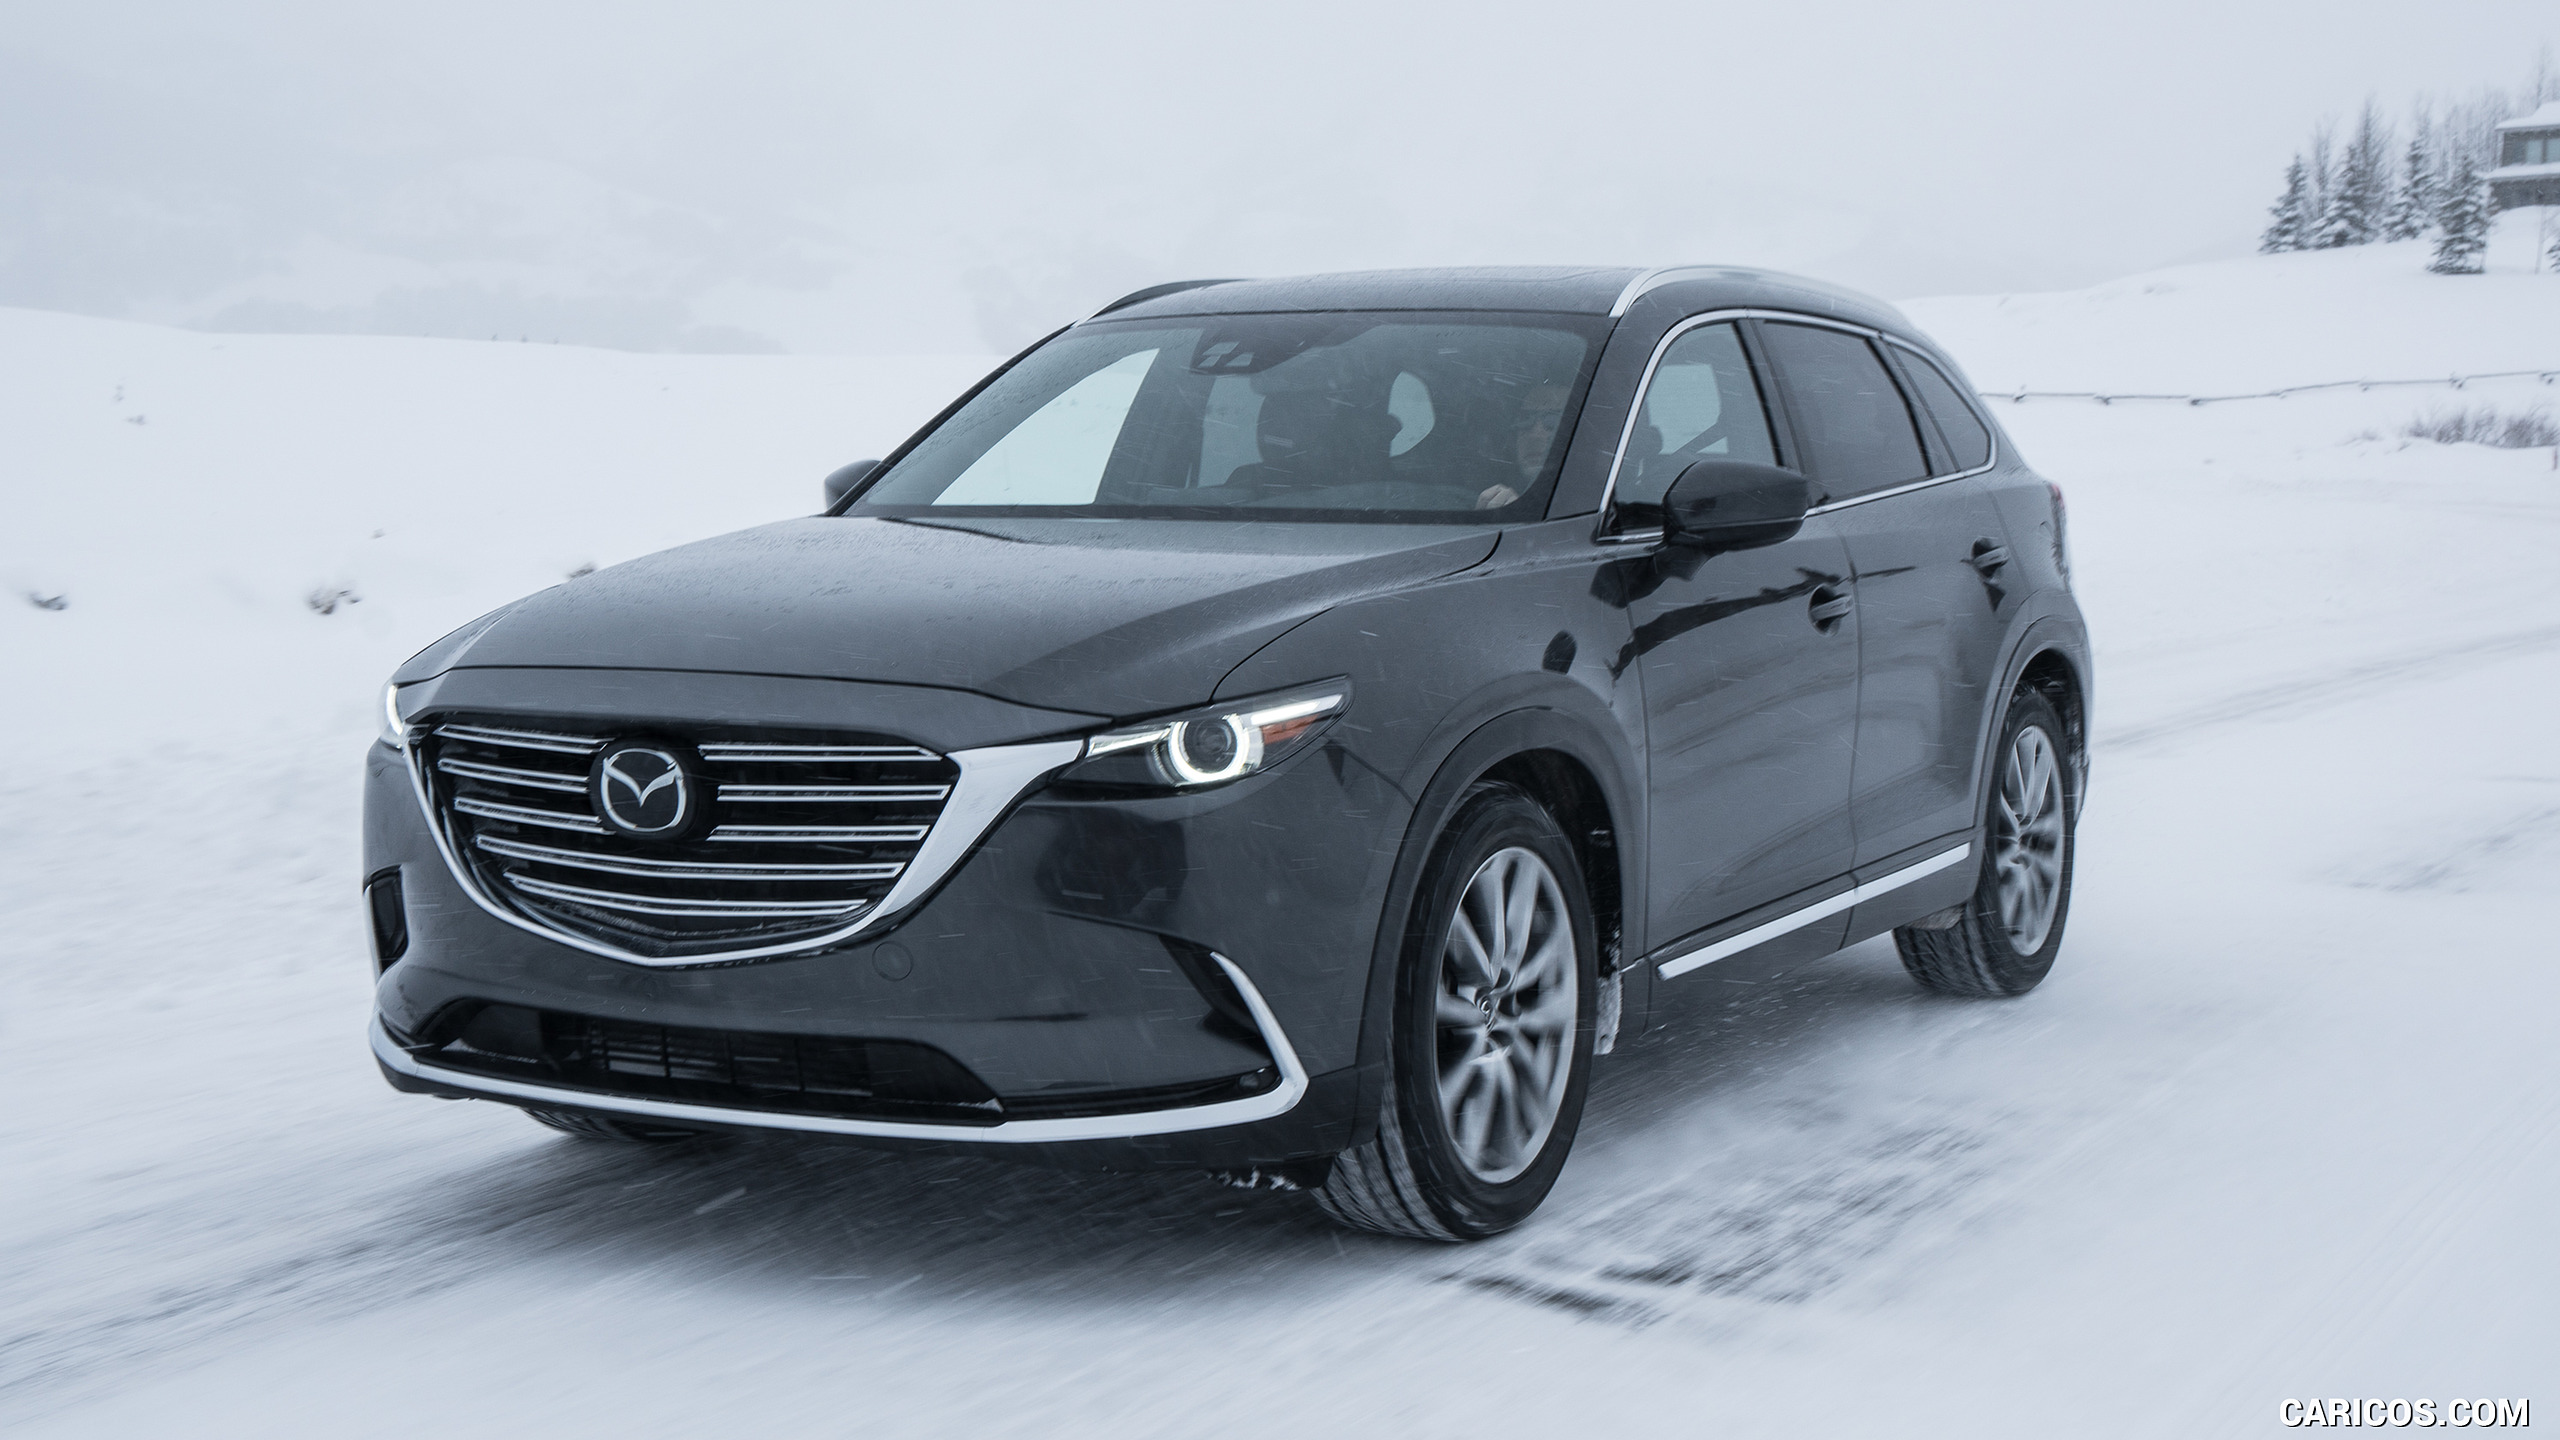 2016 Mazda CX-9 in Snow - Front Three-Quarter, #61 of 69